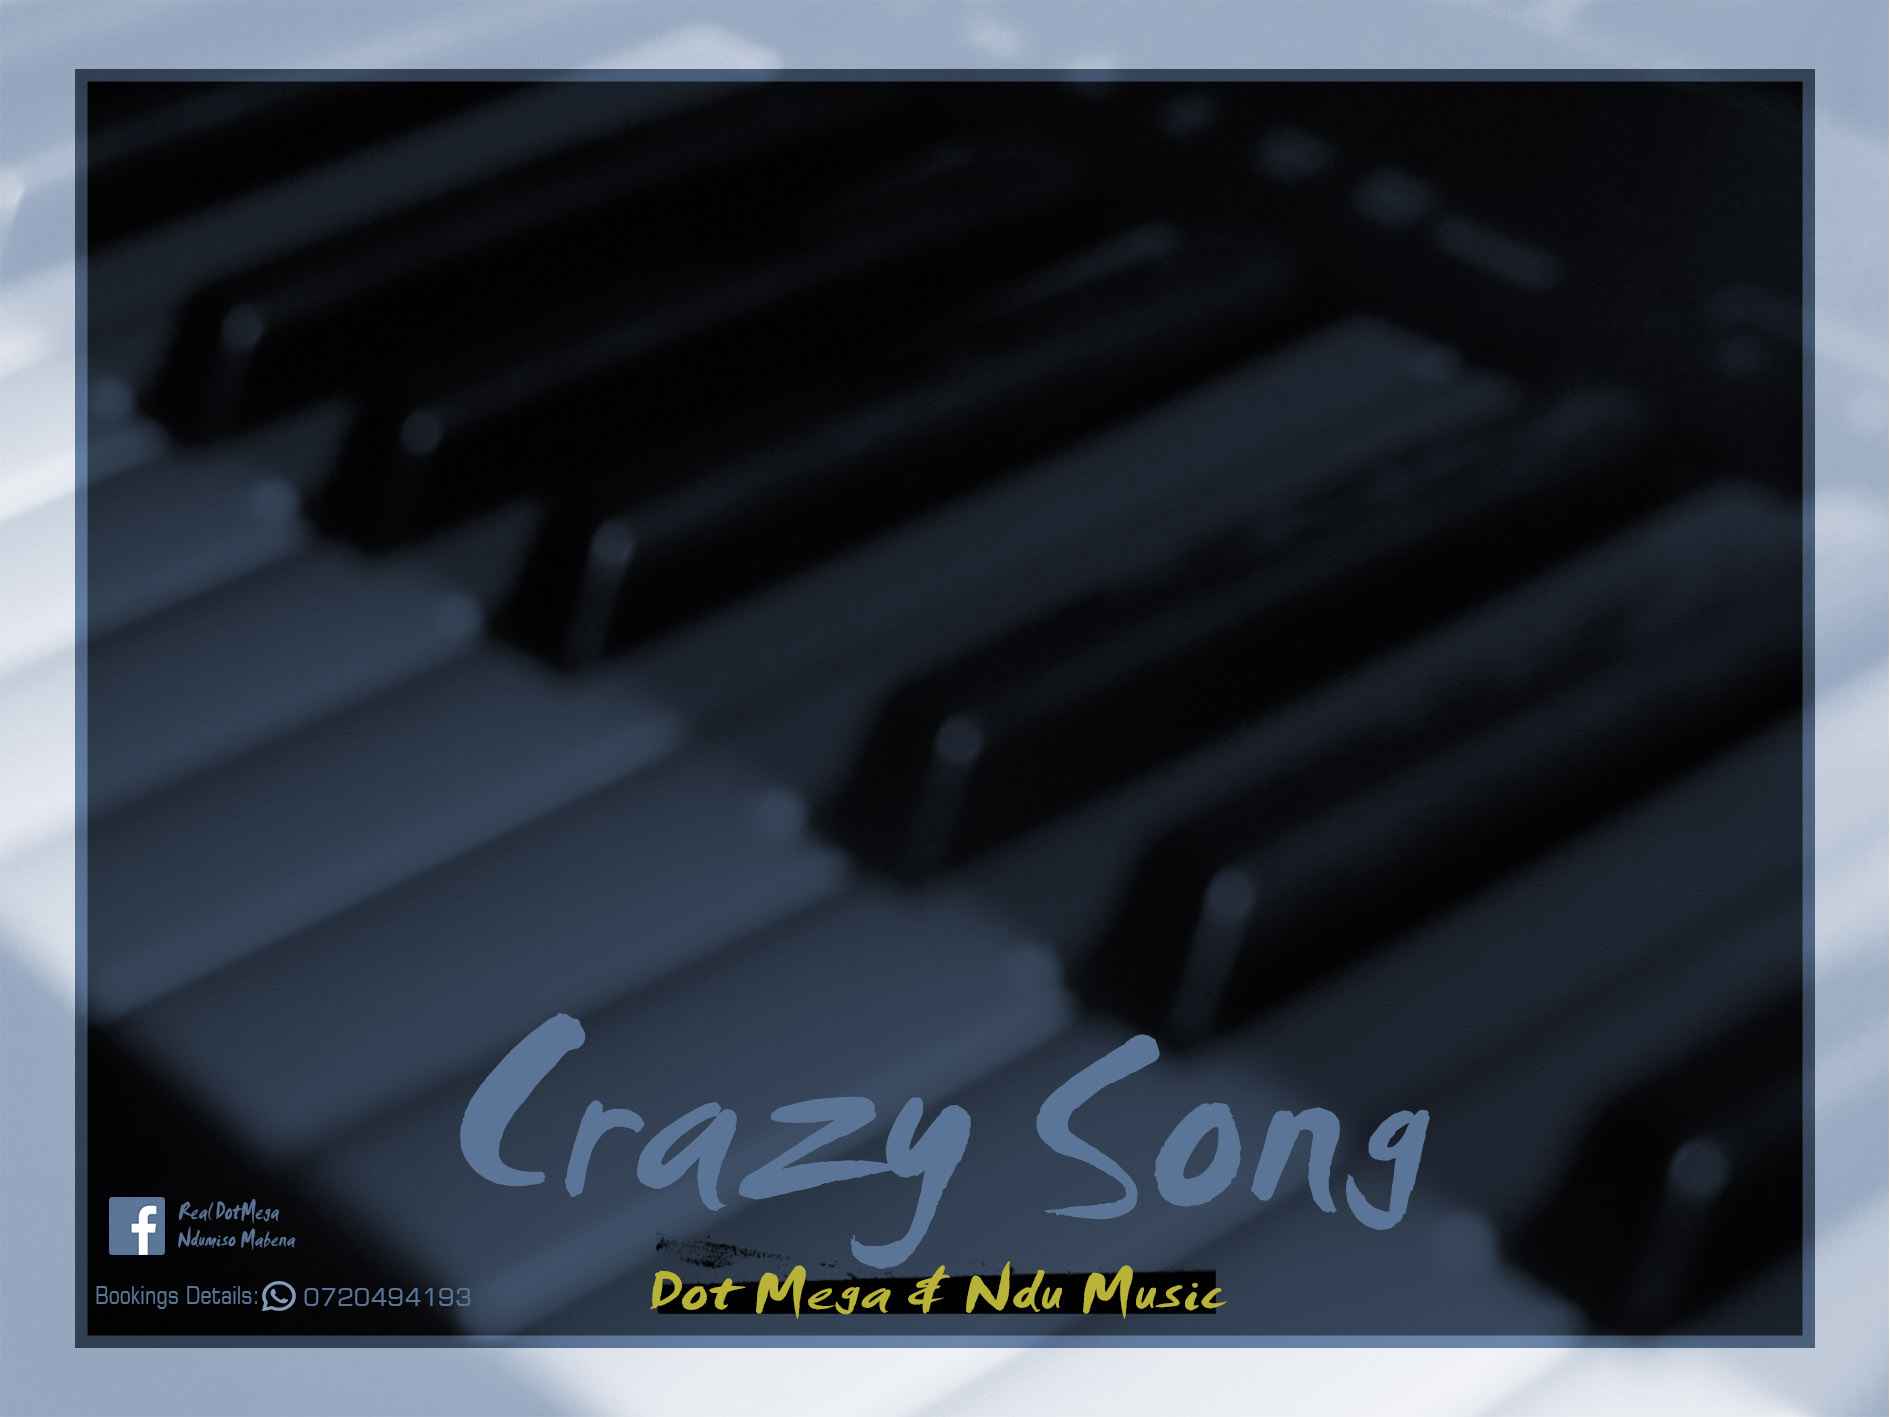 Dot Mega & Ndu Music  Crazy Song